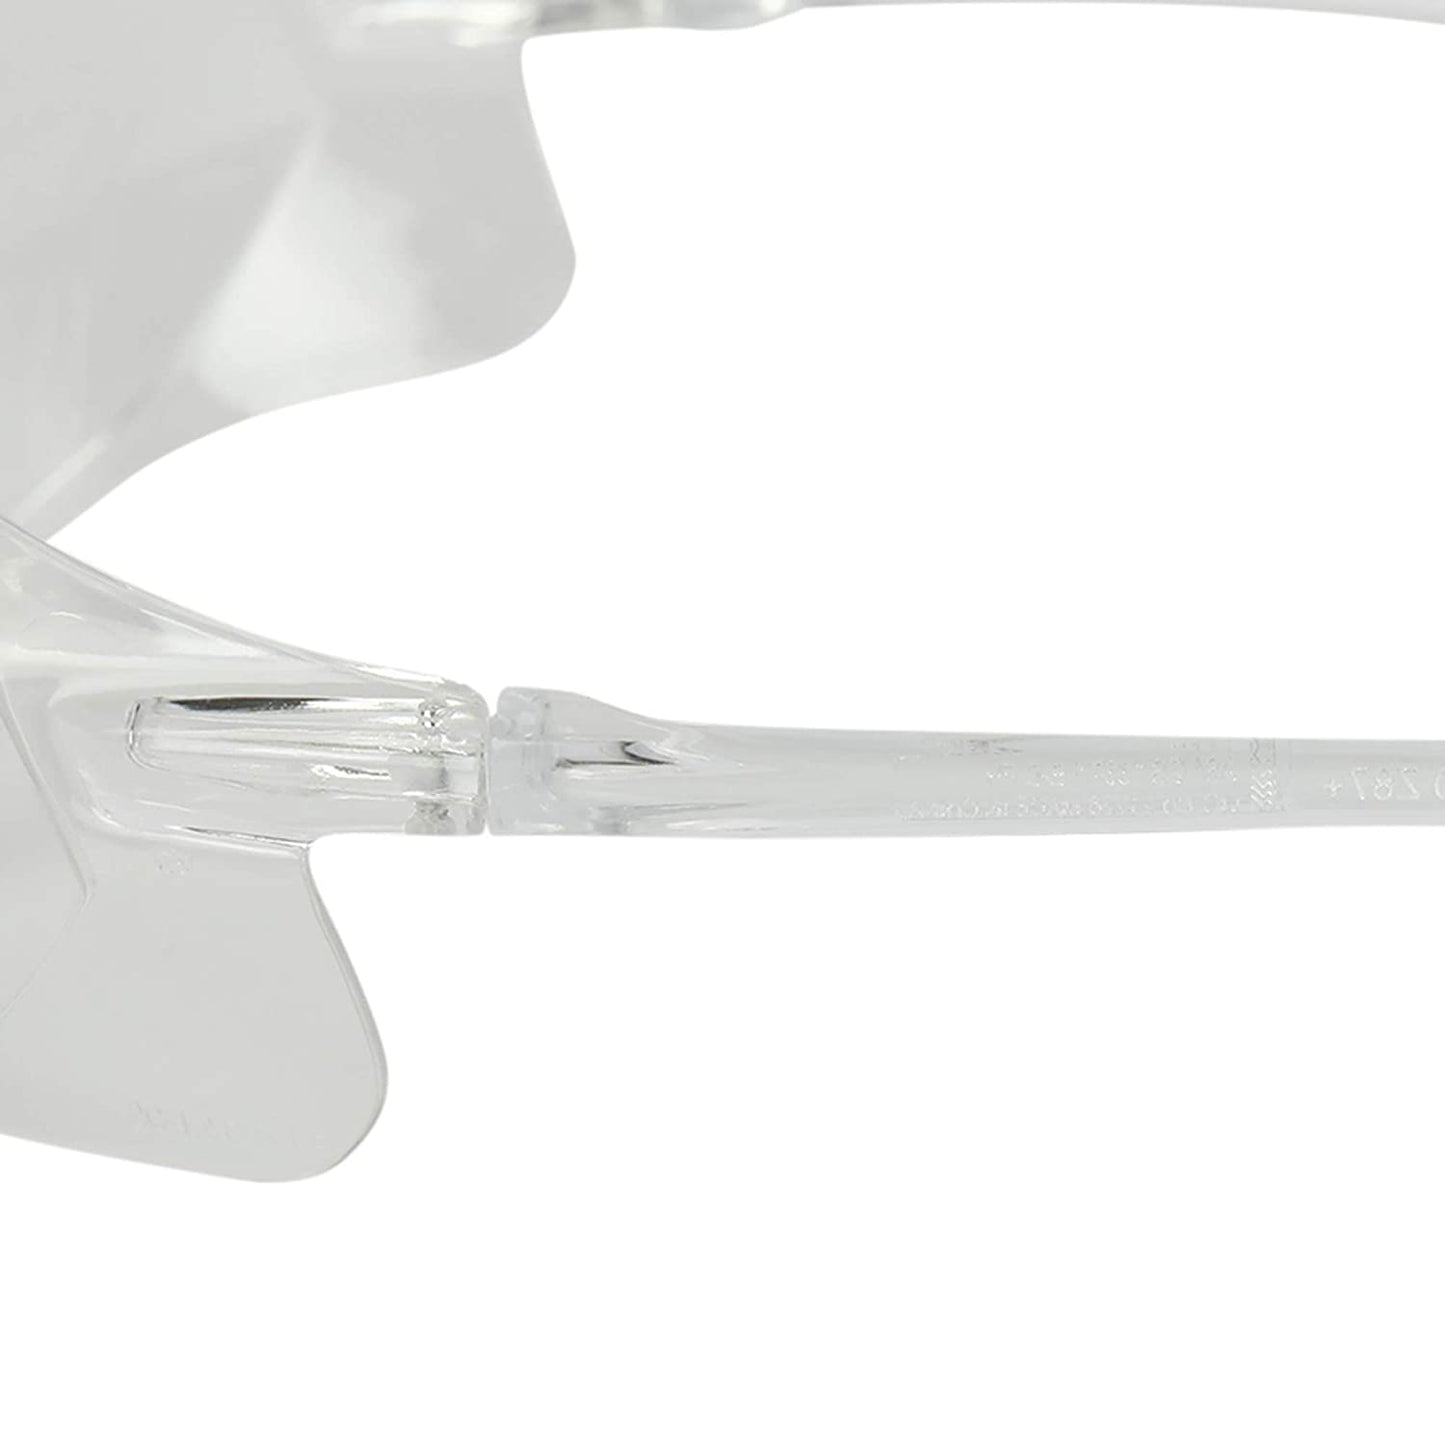 Honeywell A700 Protective Eyewear with Antifog, Polycarbonate, Clear - Hardcoat